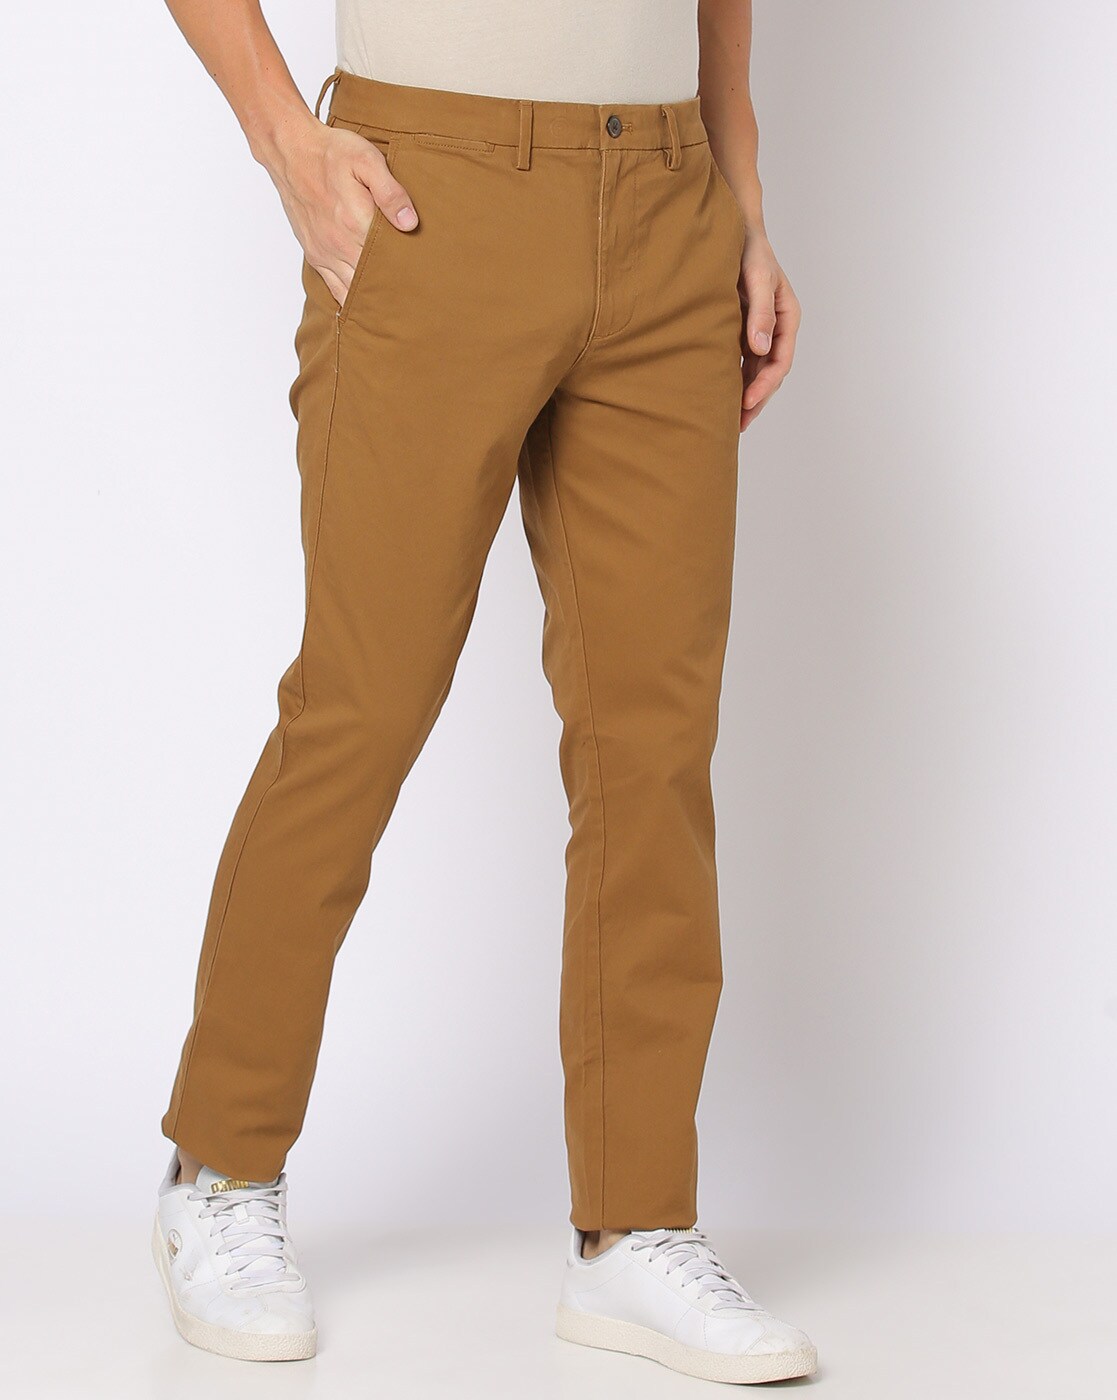 Buy GAP Mens Skinny Fit Casual Trousers 35329830800Iconic Khaki34W x  34L at Amazonin